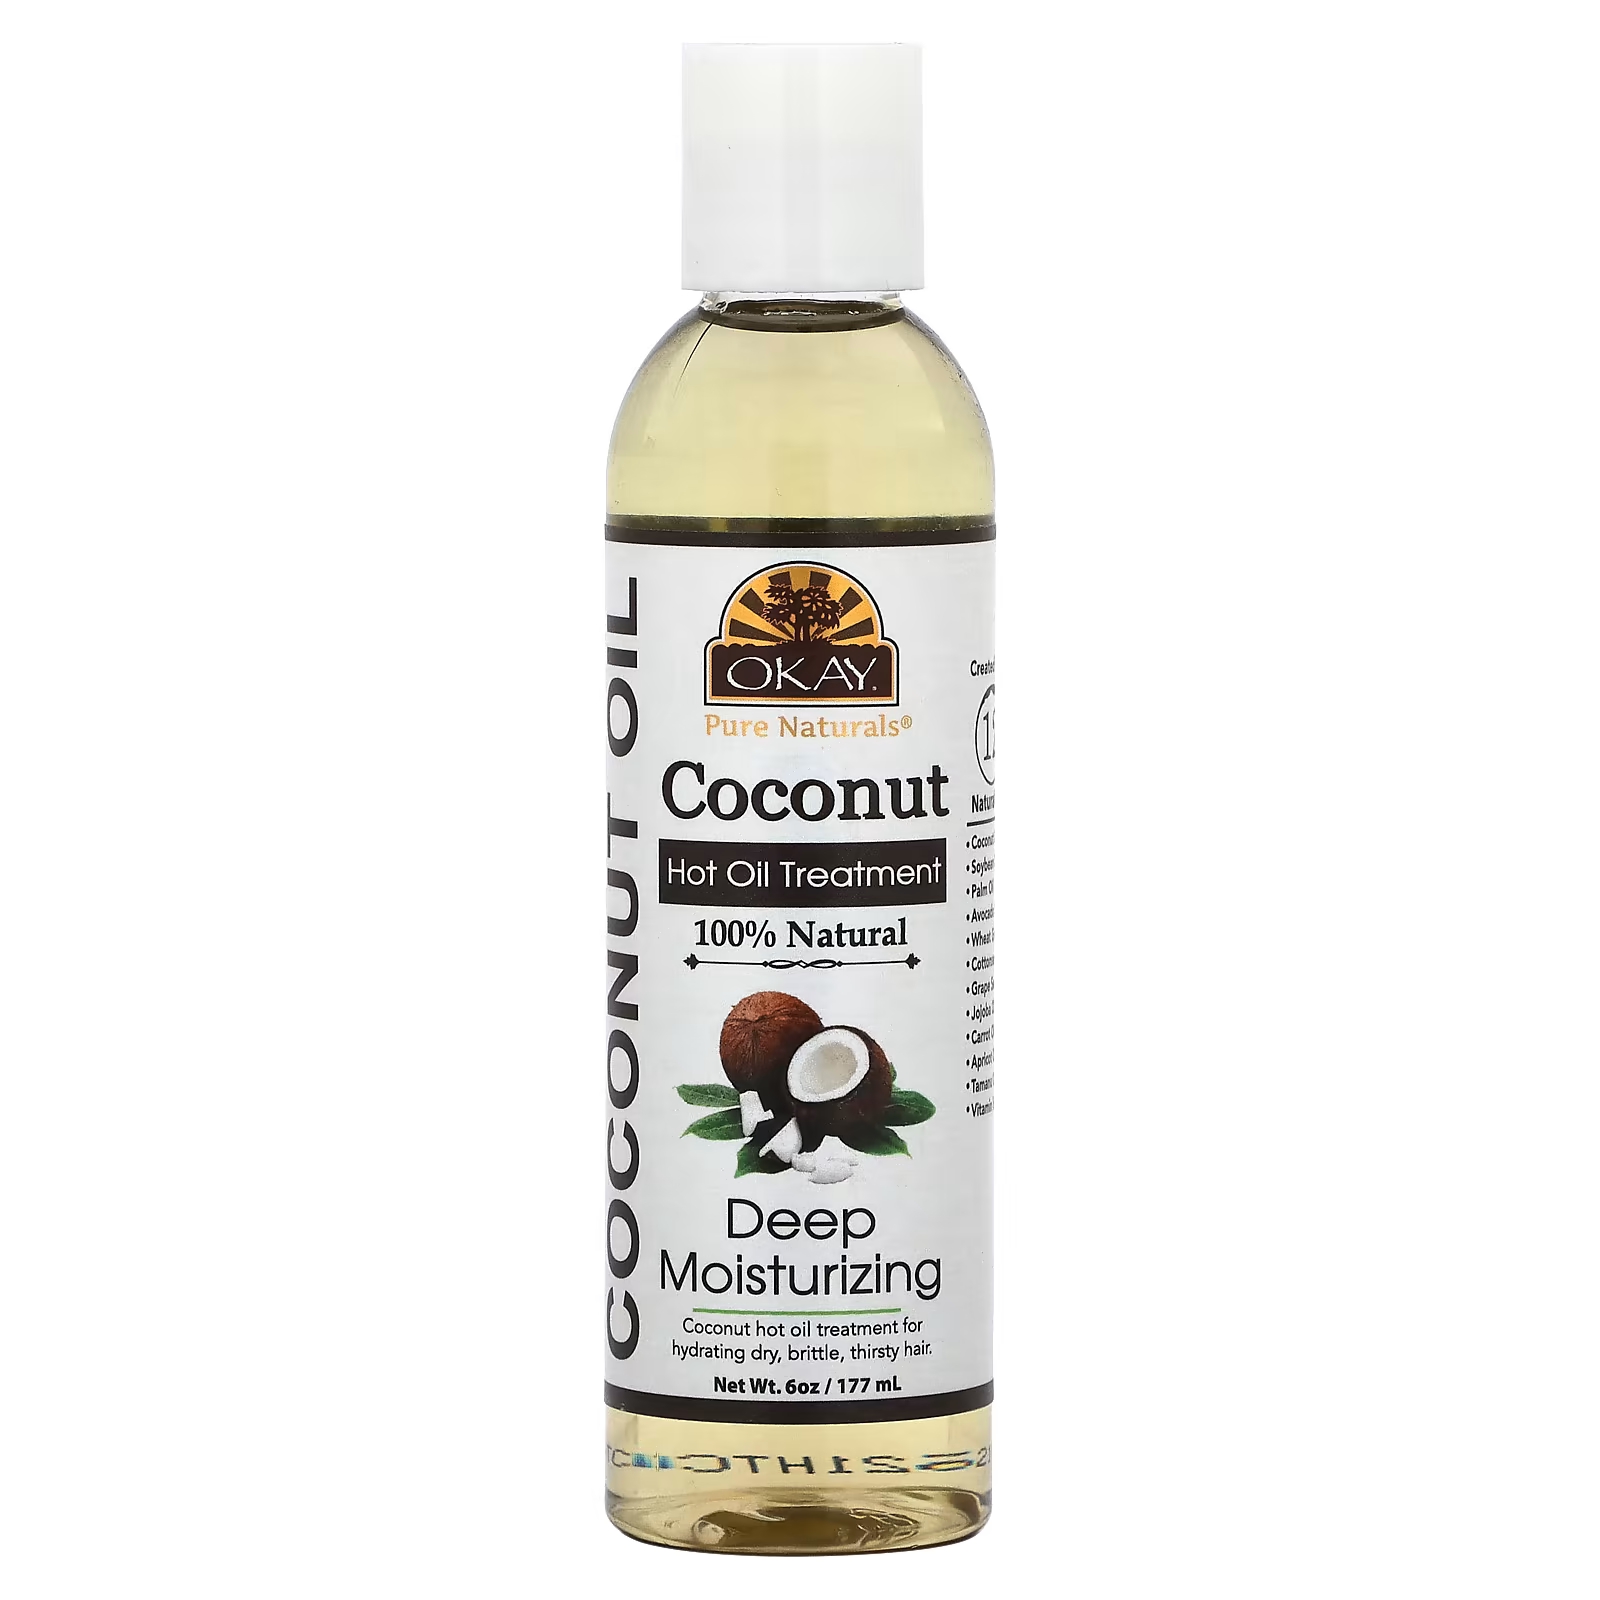 Уход Okay Pure Naturals Coconut Hot Oil Treatment глубоко увлажняющее, 177 мл